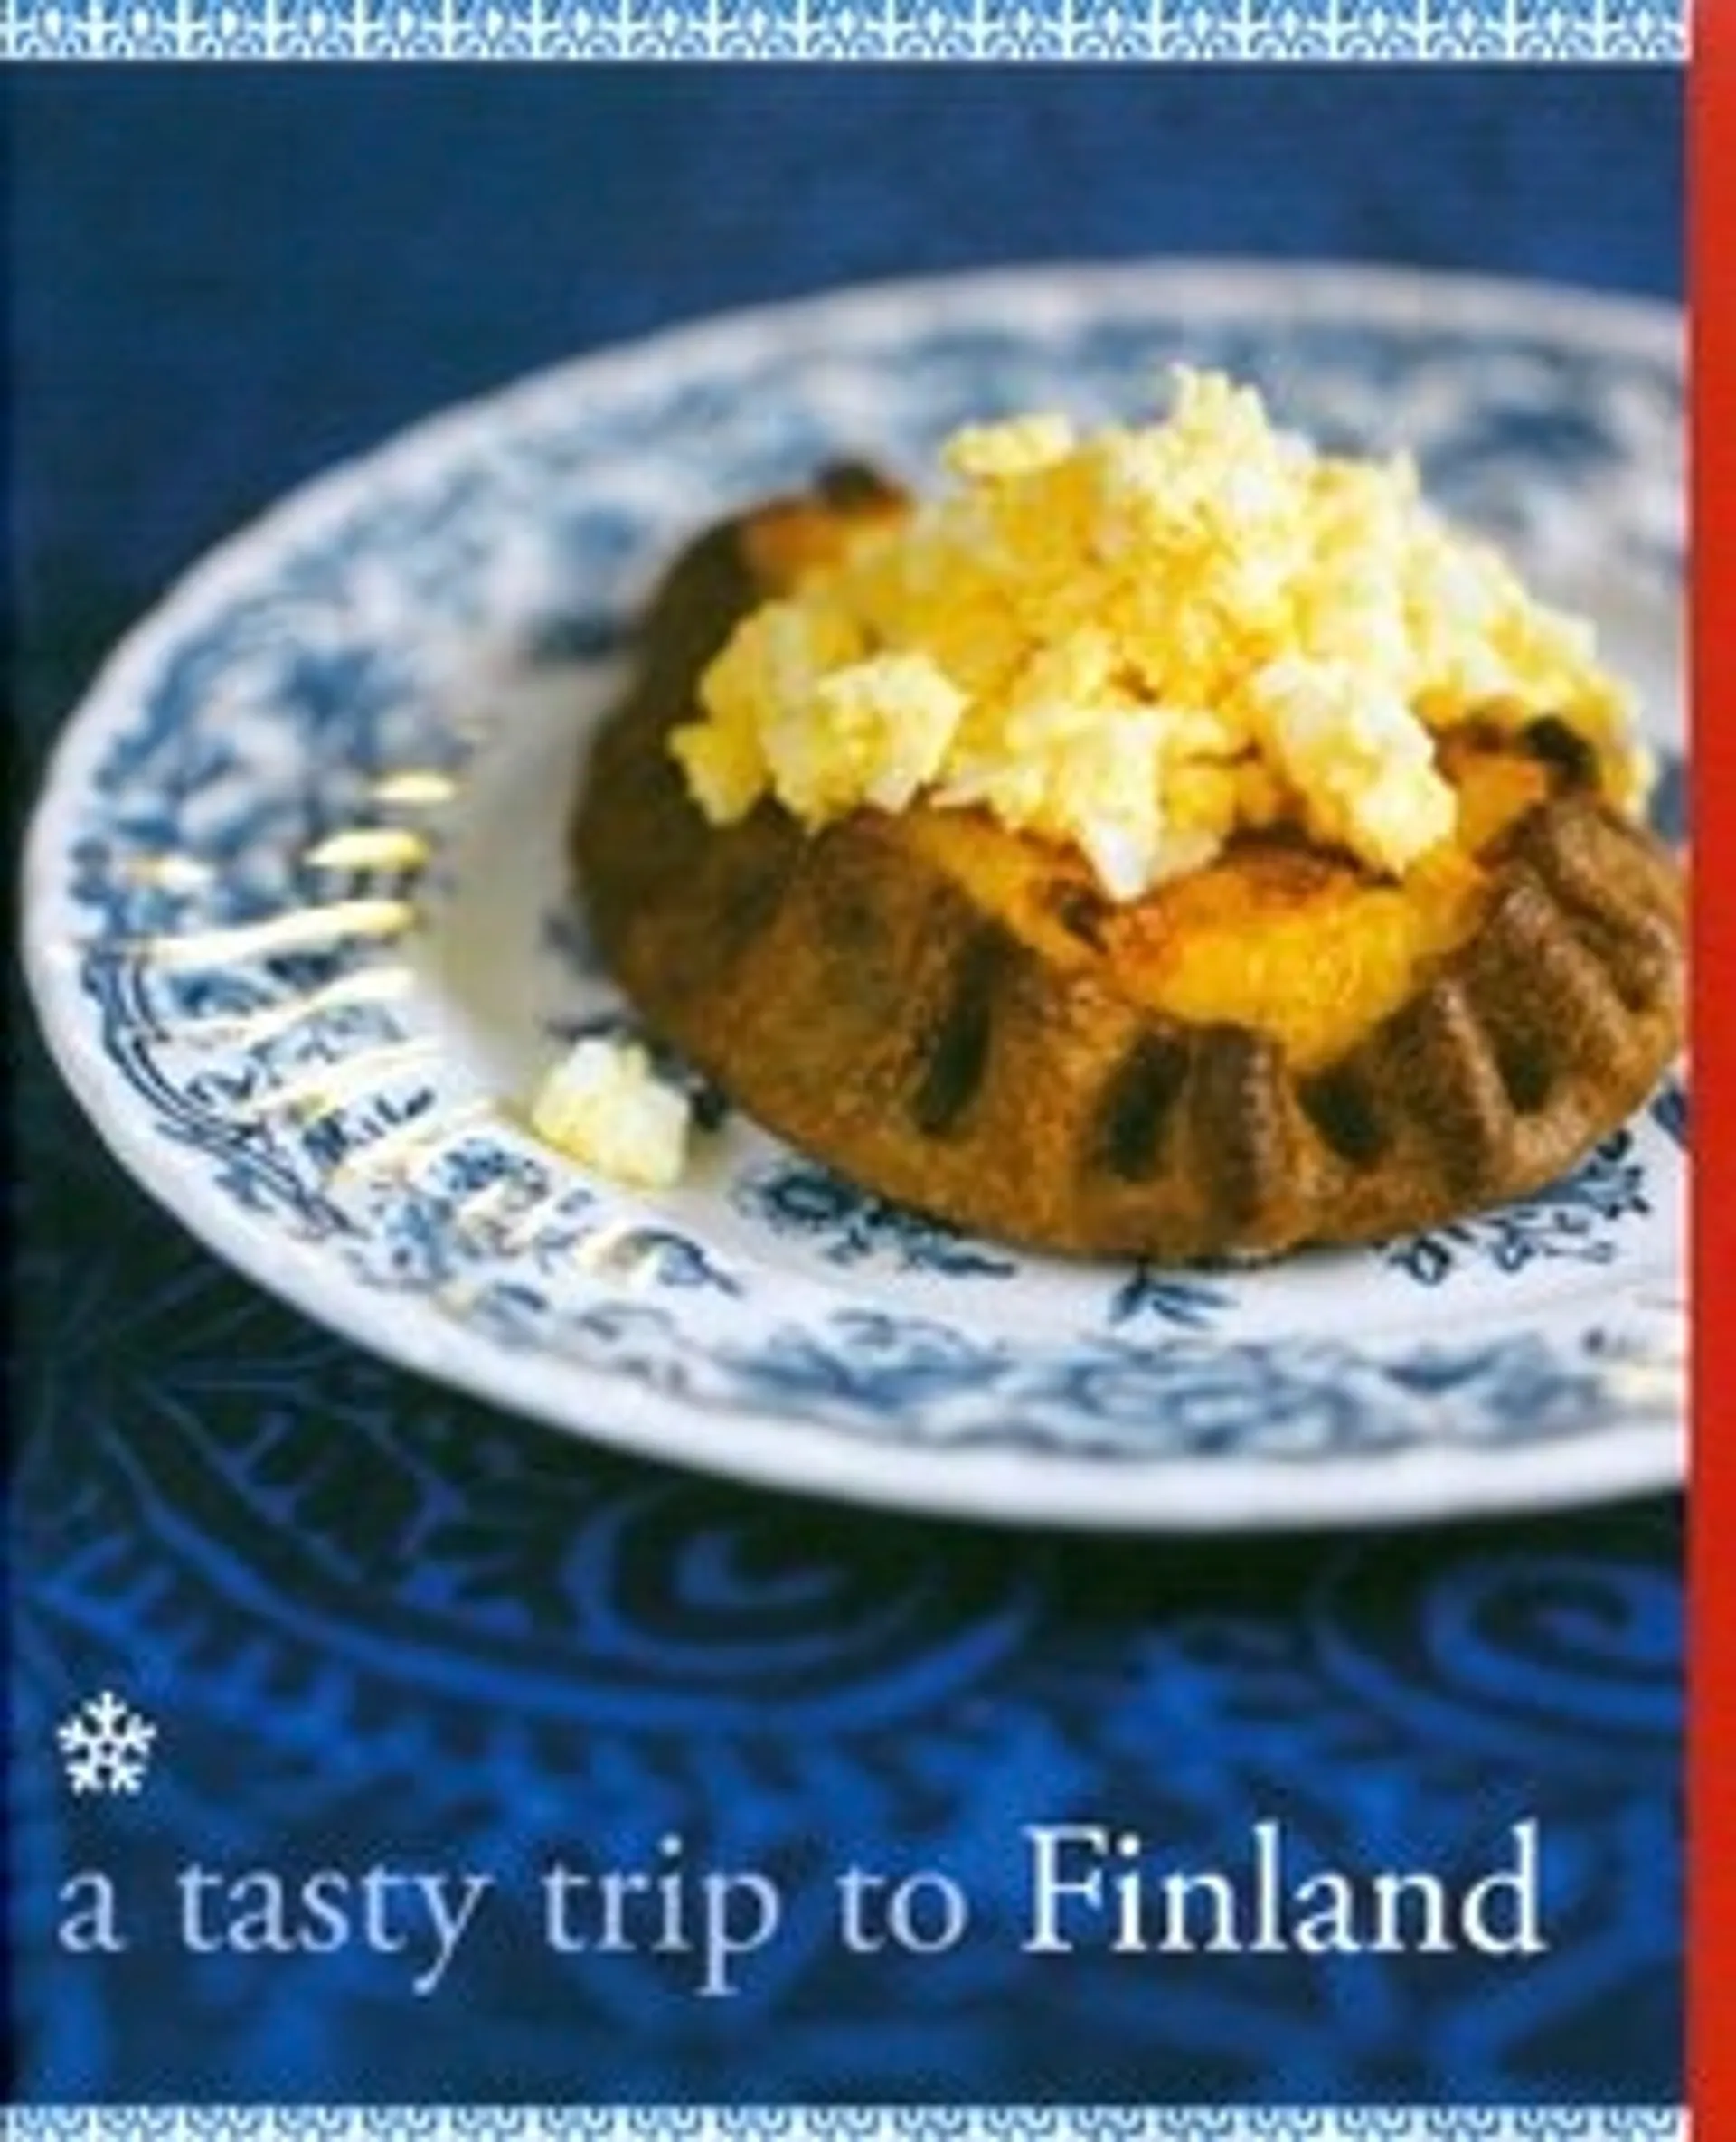 A tasty trip to Finland